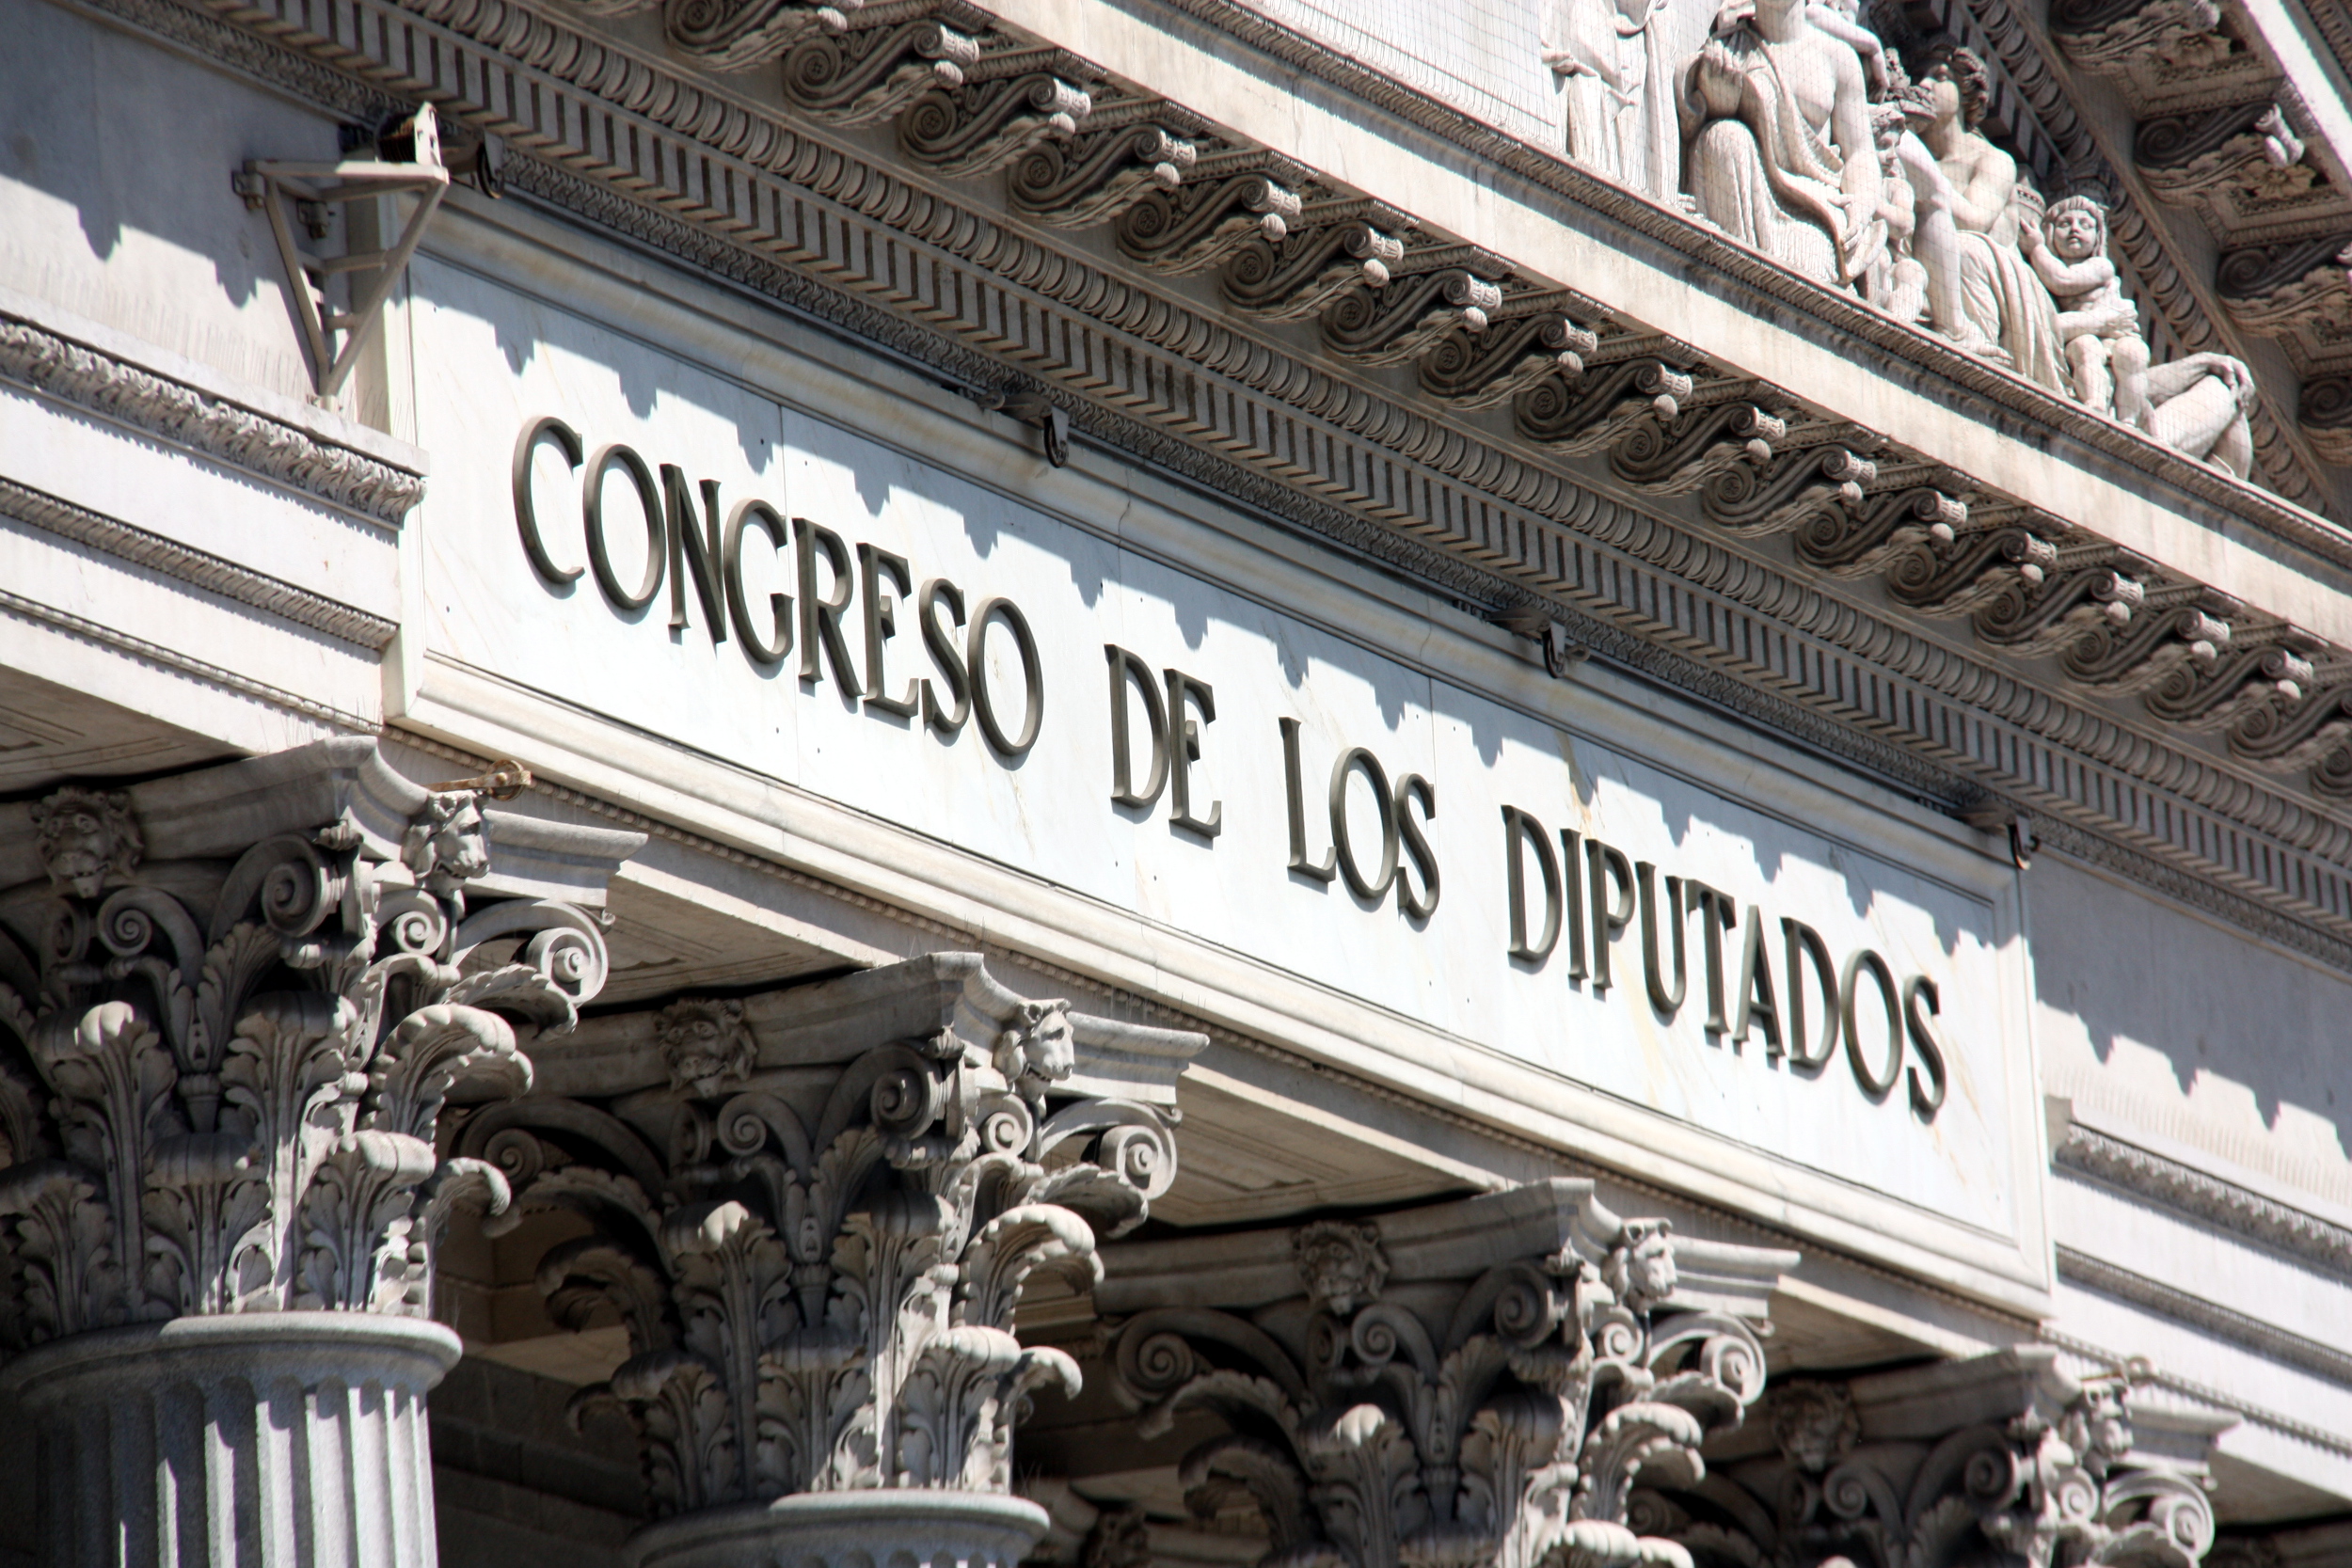 Image of 'Congreso de los Diputados', the Spanish Parliament (by ACN)